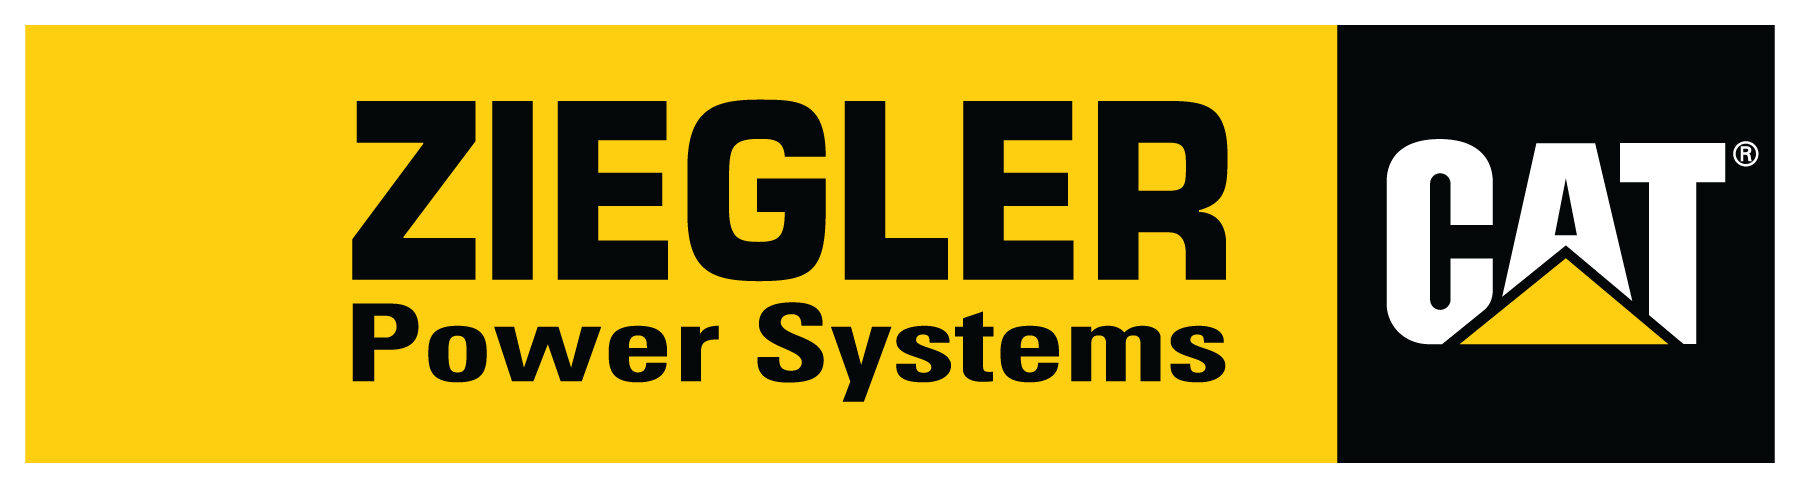 Ziegler CAT Power Systems Logo